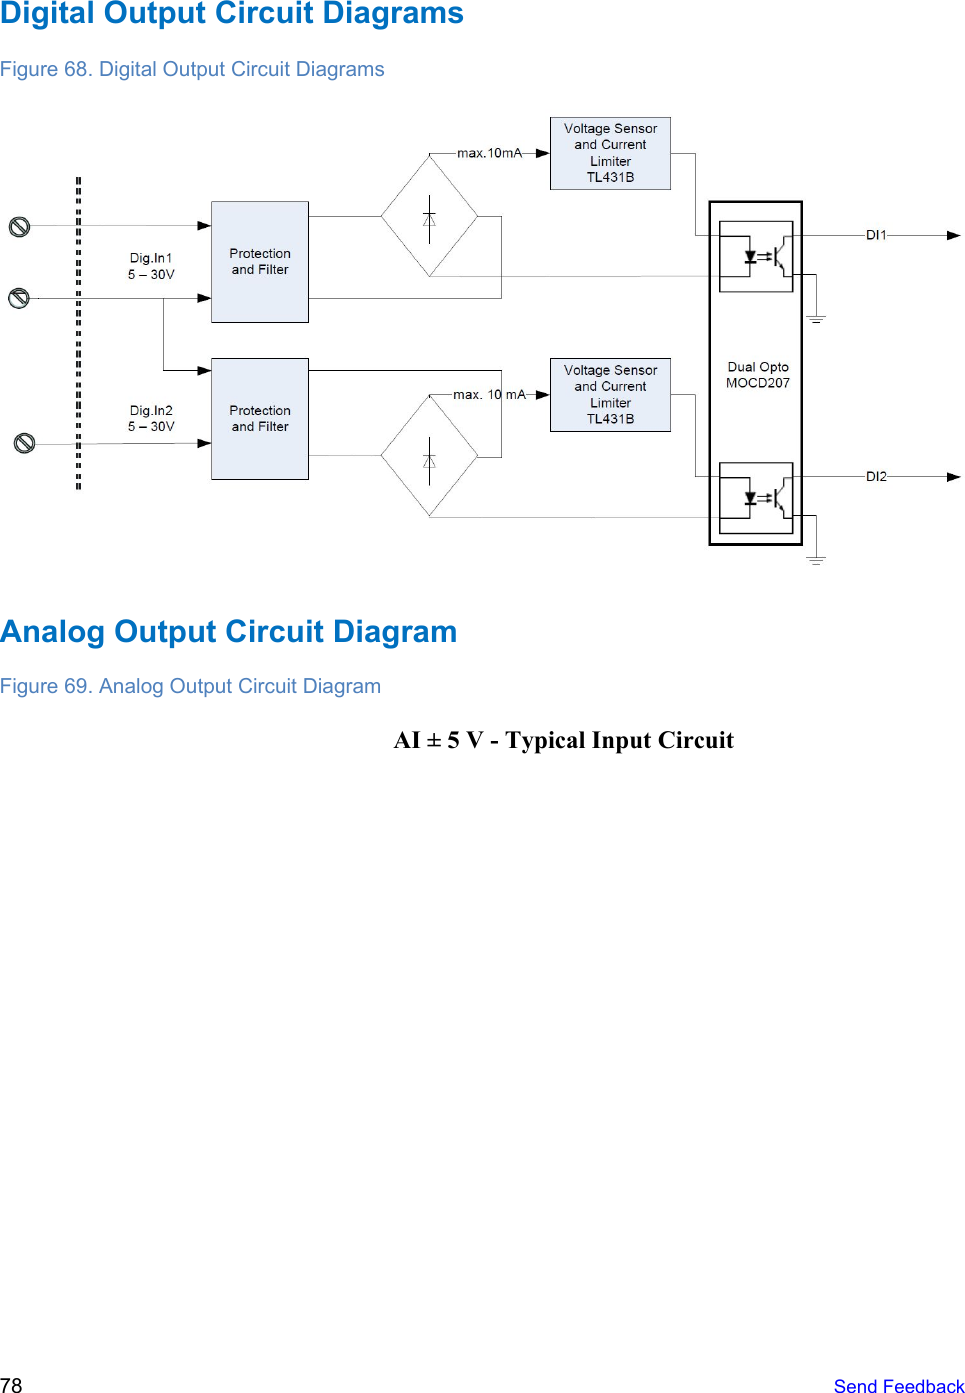    Digital Output Circuit Diagrams Figure 68. Digital Output Circuit Diagrams  Analog Output Circuit Diagram Figure 69. Analog Output Circuit Diagram AI ± 5 V - Typical Input Circuit  78   Send Feedback  